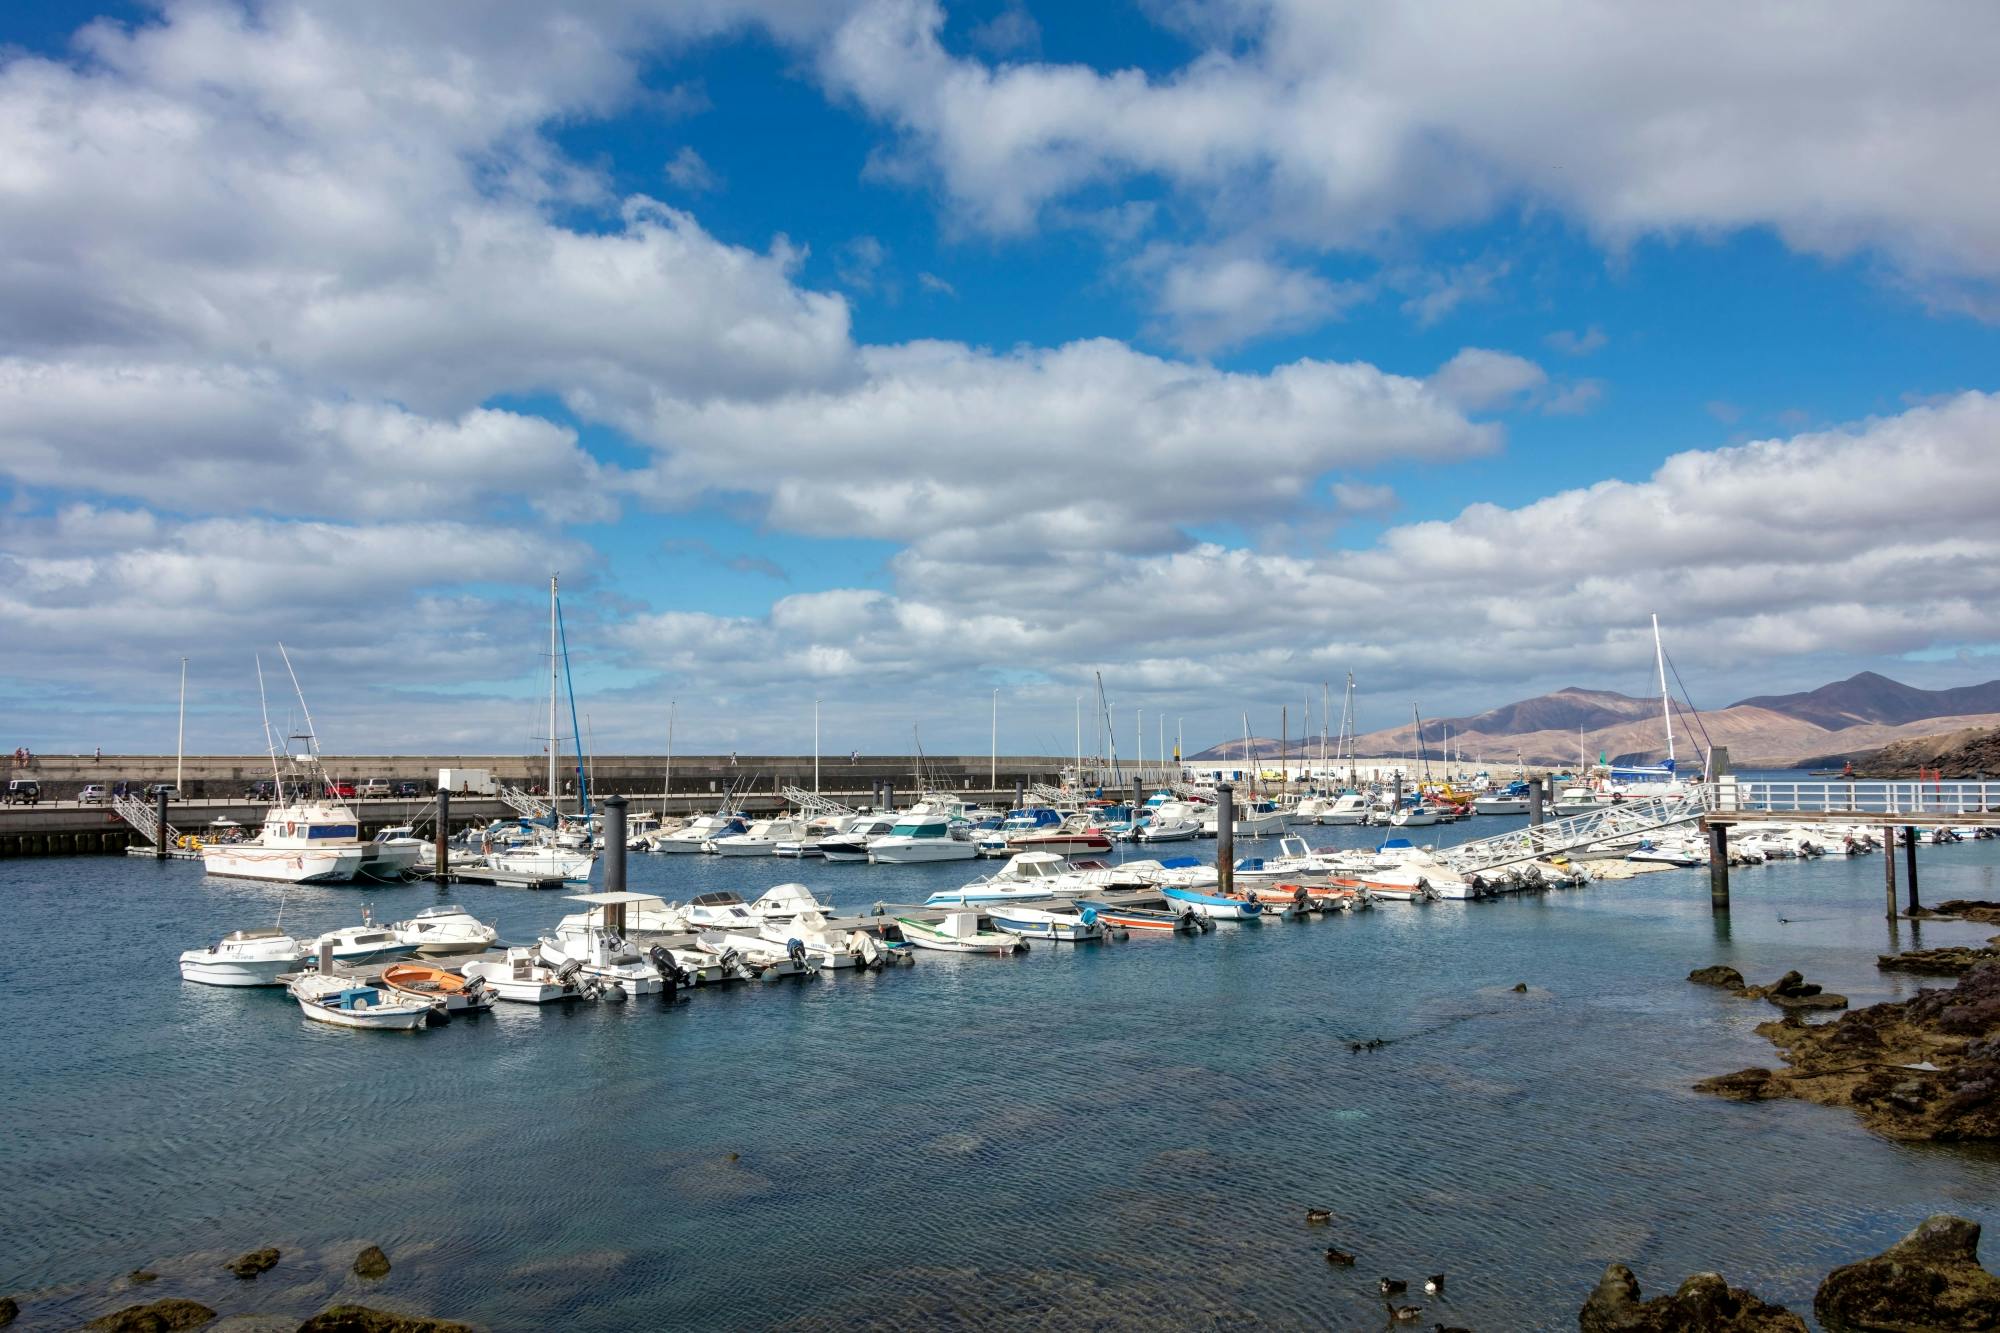 Explore Lanzarote - Submarine Safari and Puerto del Carmen